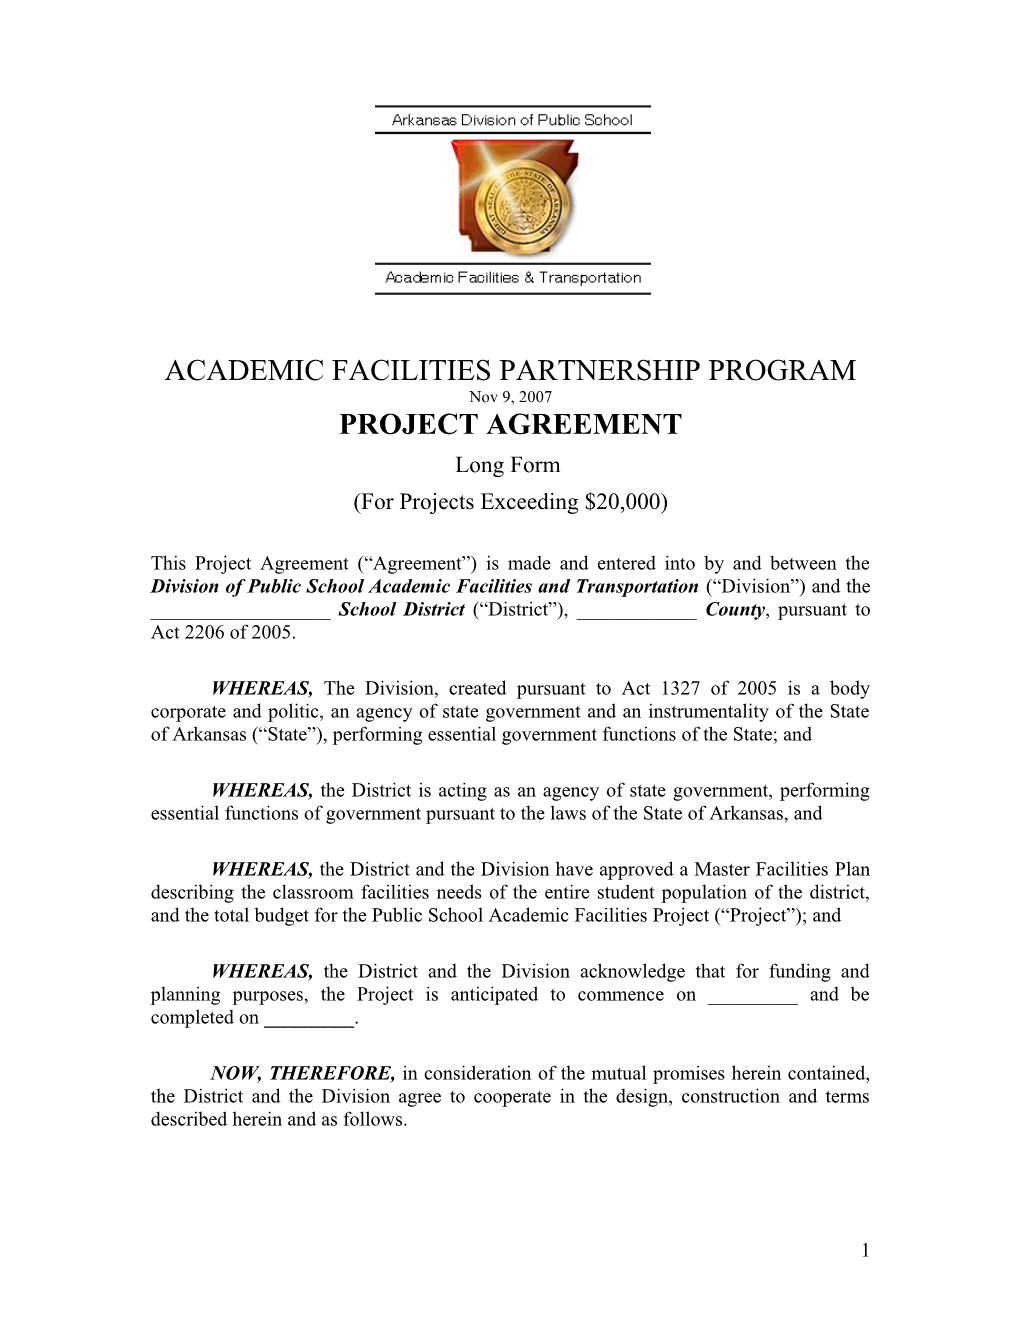 Academic Facilities Partnership Program s1